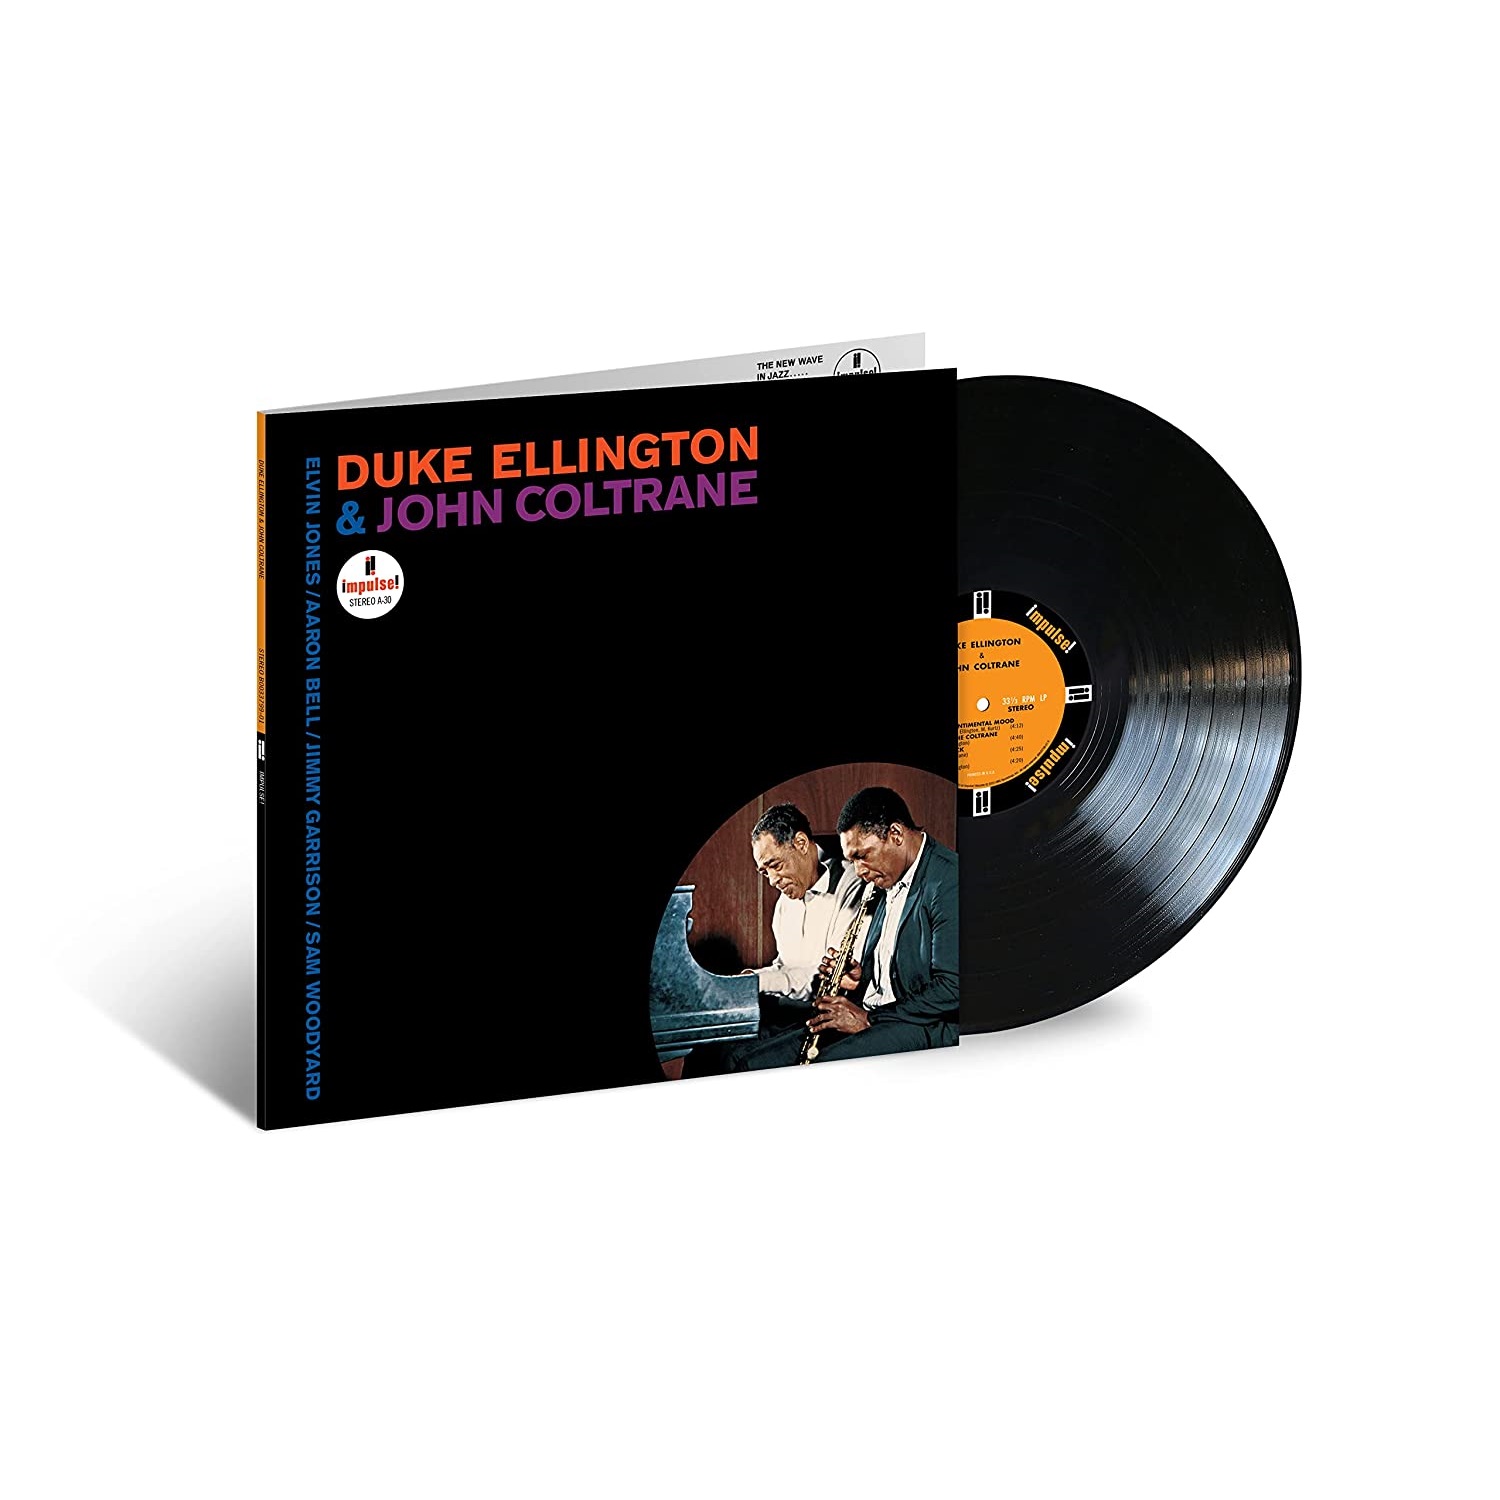 Duke Ellington / John Coltrane (듀크 엘링턴 / 존 콜트레인) - Duke Ellington & John Coltrane [LP] 